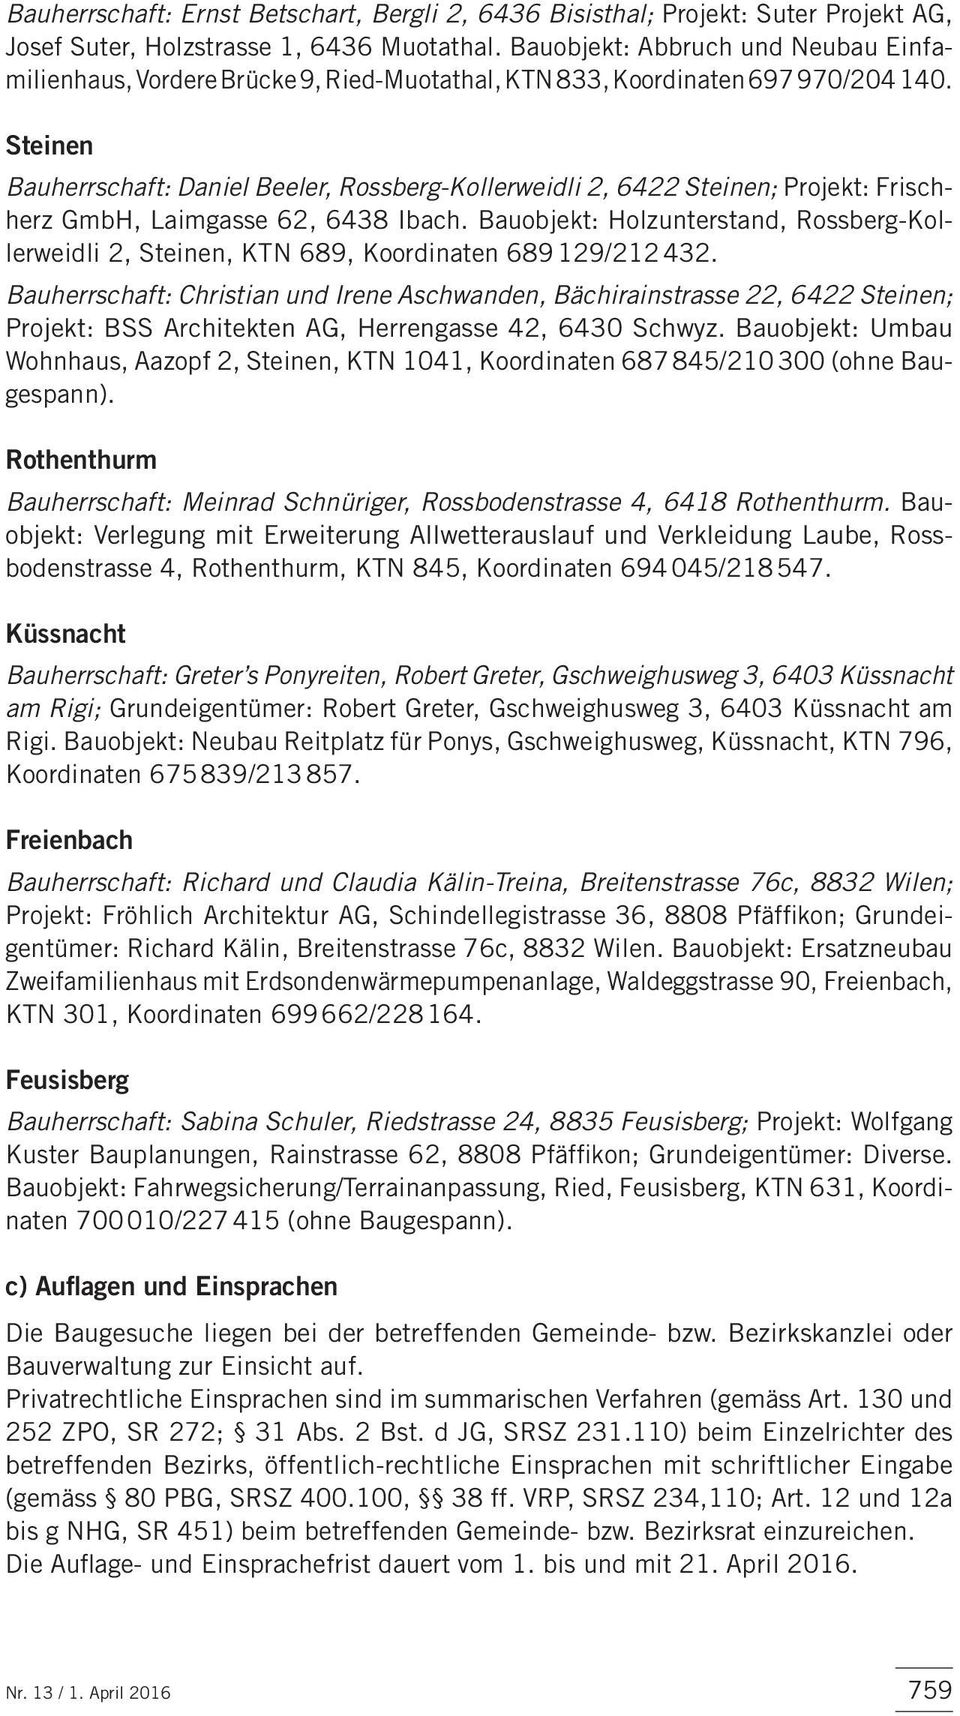 Steinen Bauherrschaft: Daniel Beeler, Rossberg-Kollerweidli 2, 6422 Steinen; Projekt: Frischherz GmbH, Laimgasse 62, 6438 Ibach.